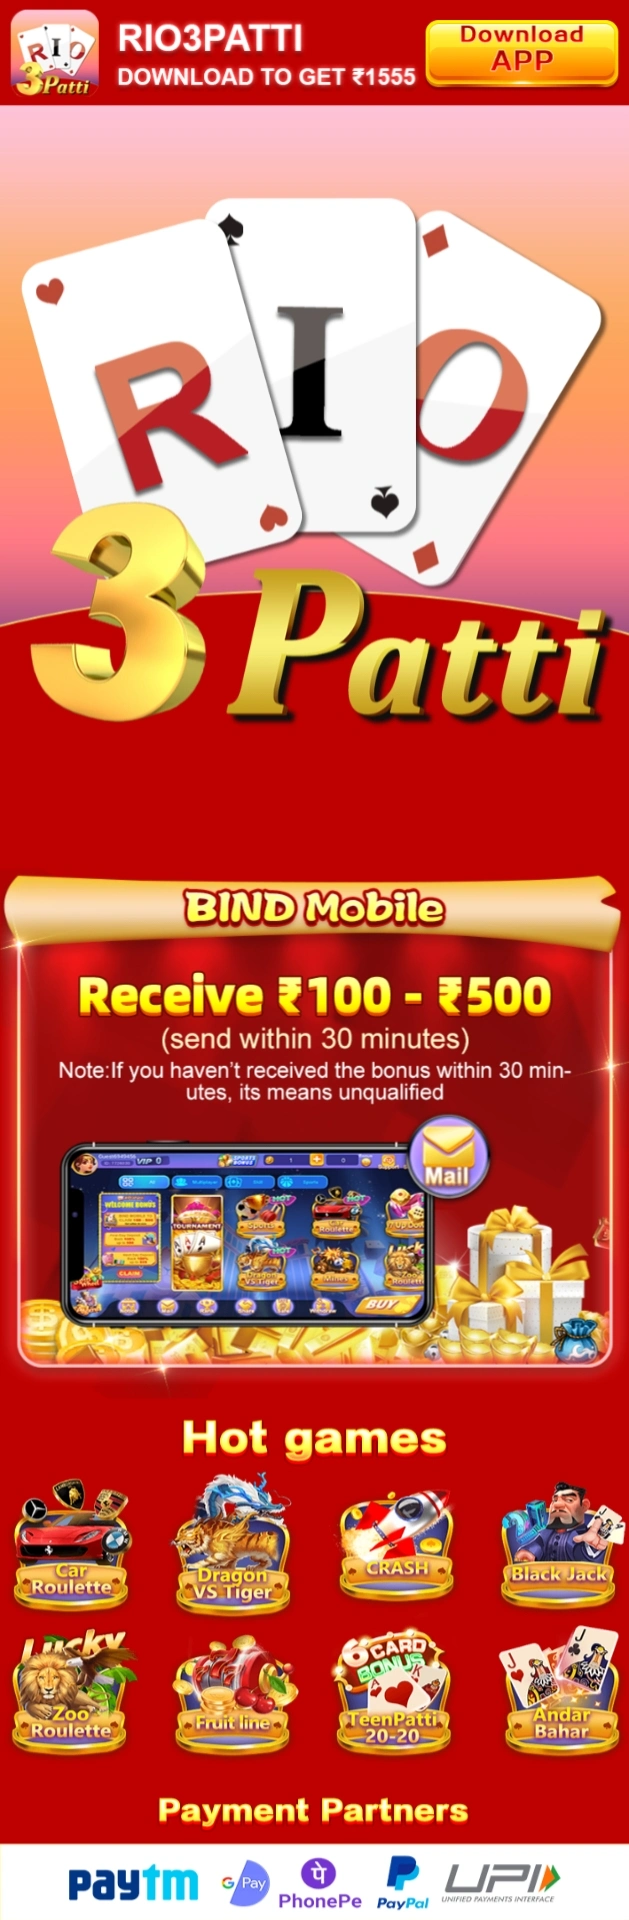 RIO 3Patti App - India Rummy APk